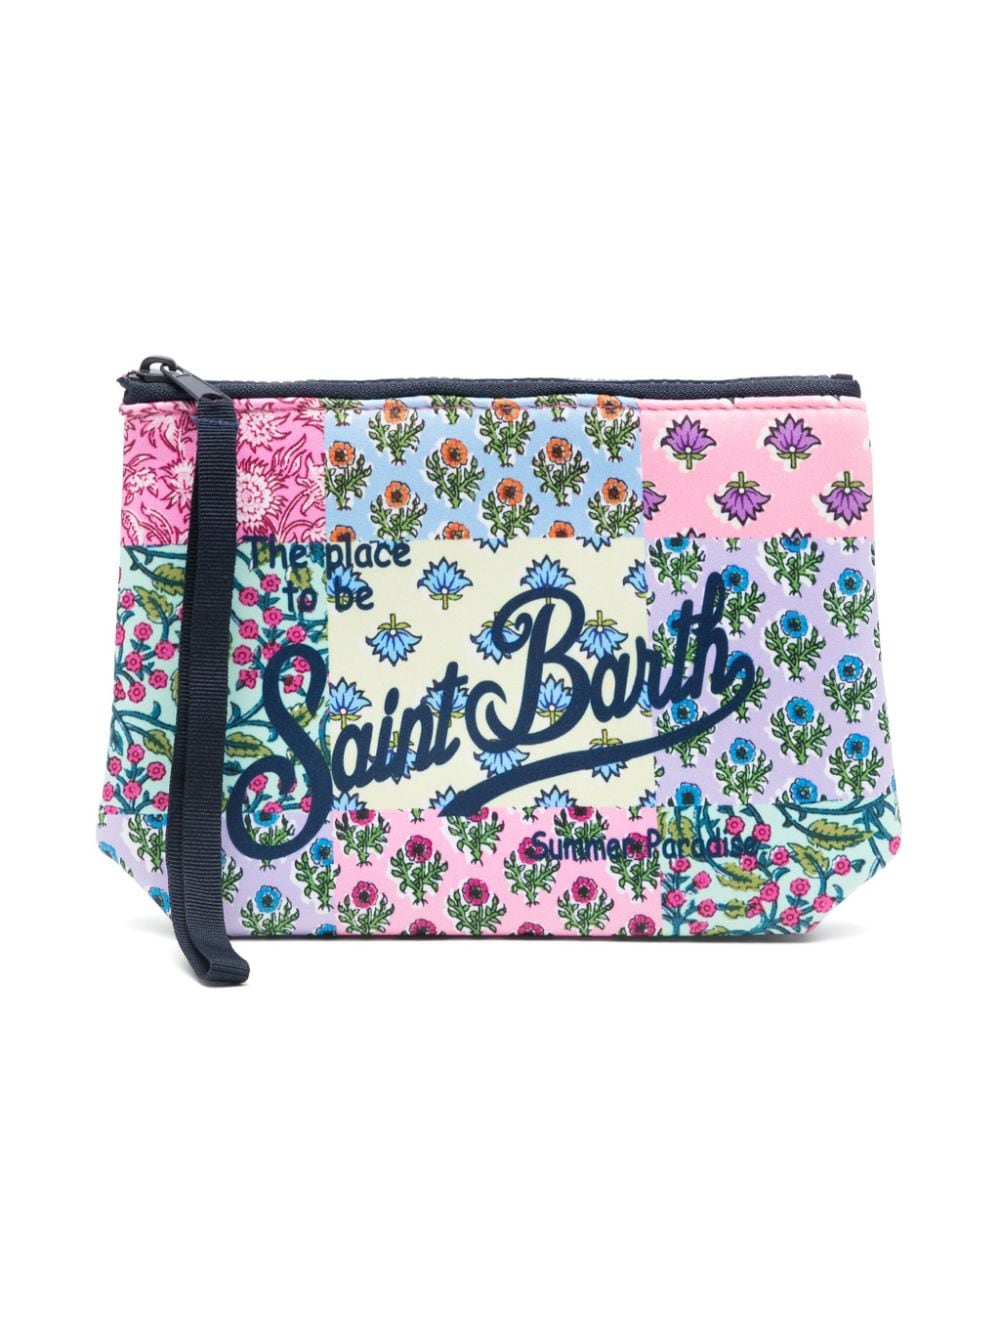 Multicolored handbag for girls with logo